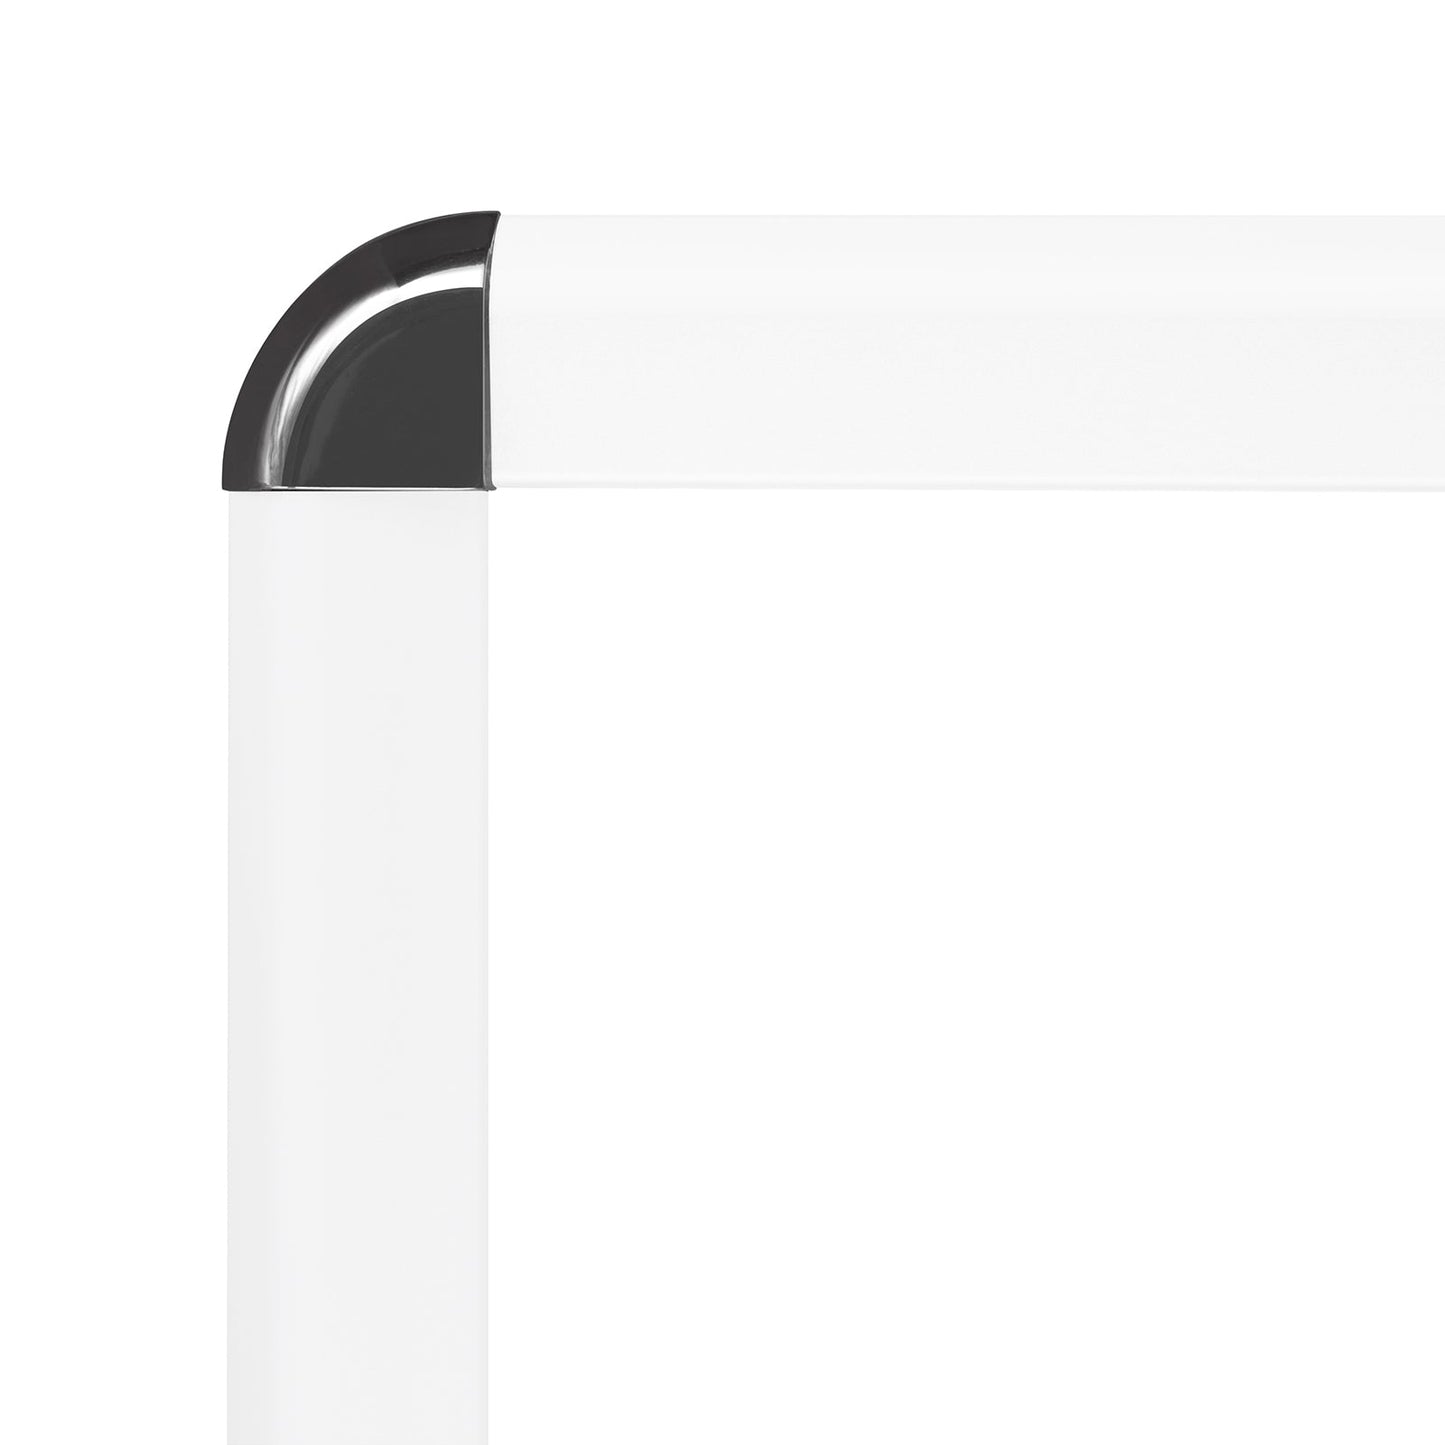 24x30 White SnapeZo® Sidewalk Sign - 1.25" Profile - Snap Frames Direct